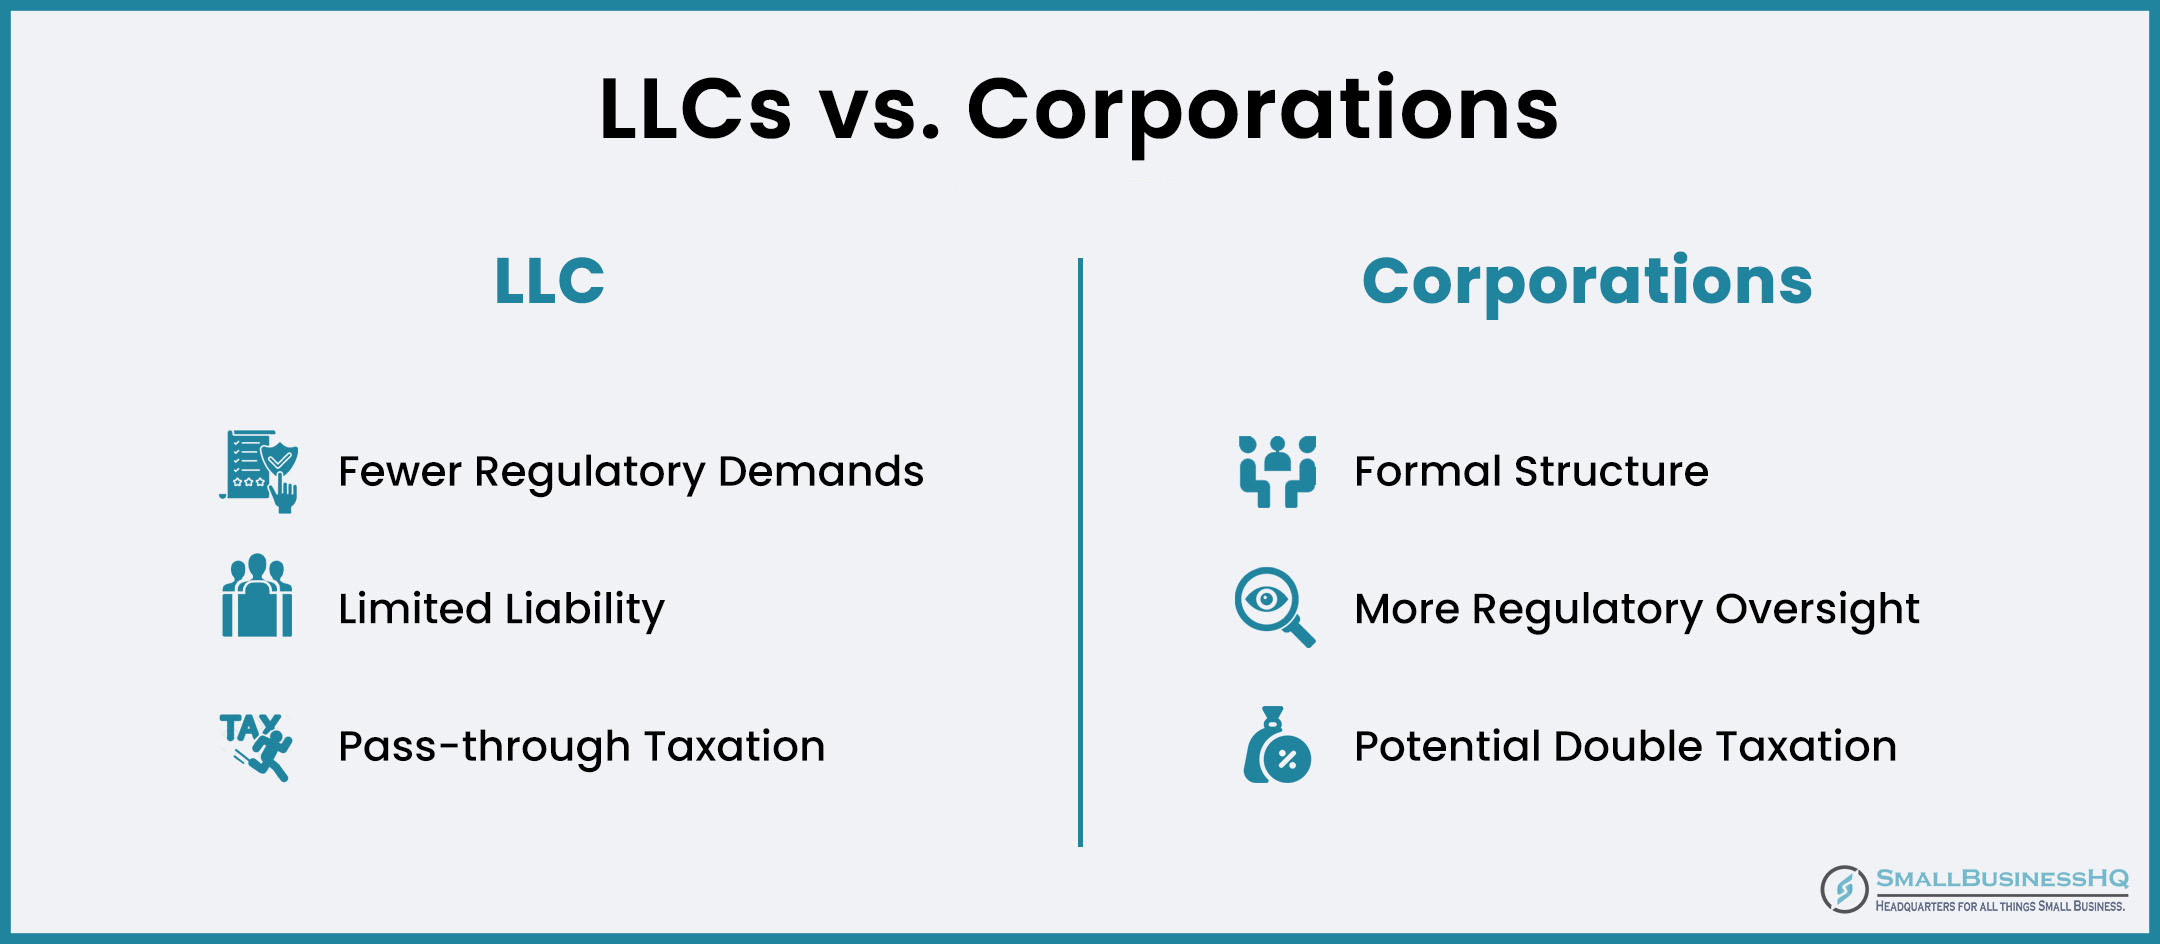 LLC vs Corporation